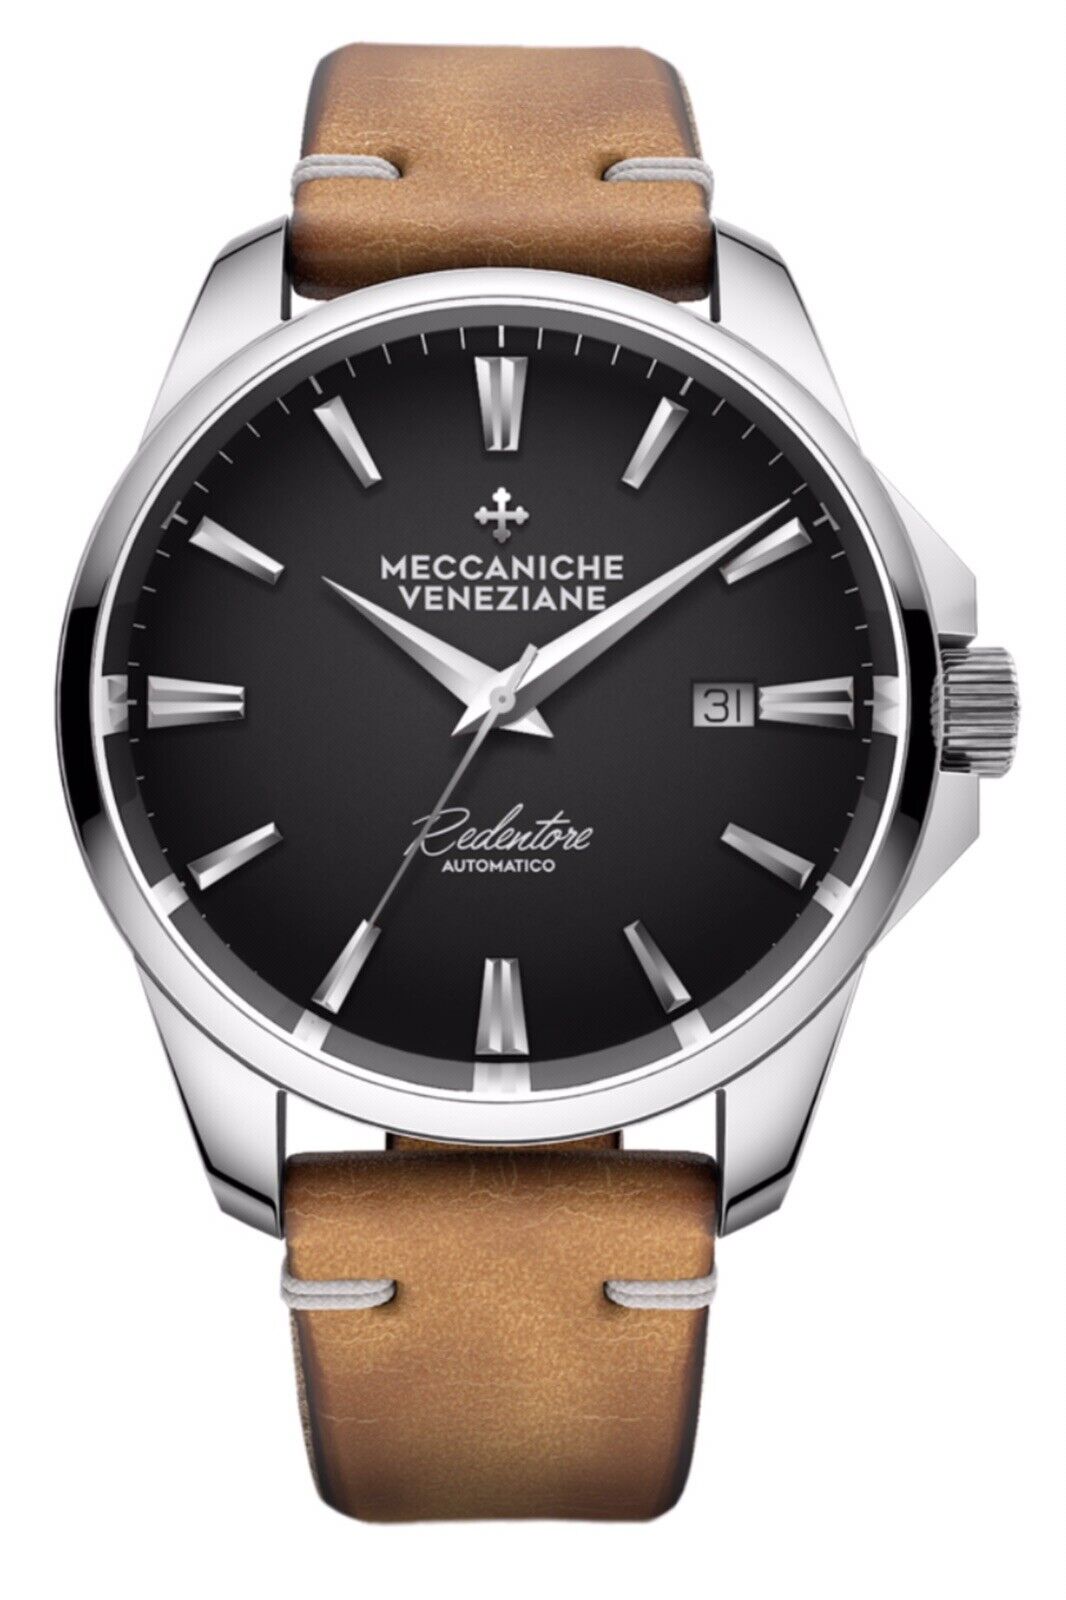 Meccaniche Veneziane Automatic Watch Redentore 4.0 Black, Leather Band, 1301002